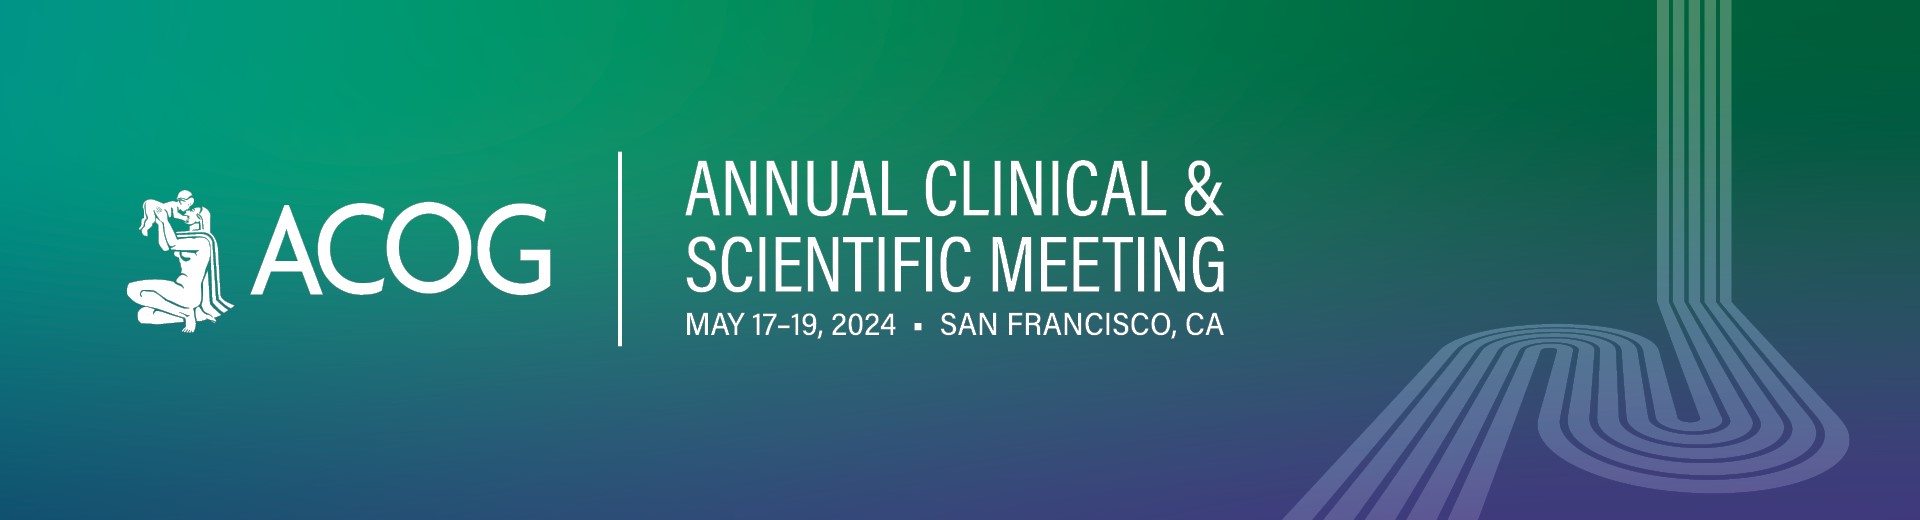 2024 ACOG Annual Clinical & Scientific Meeting